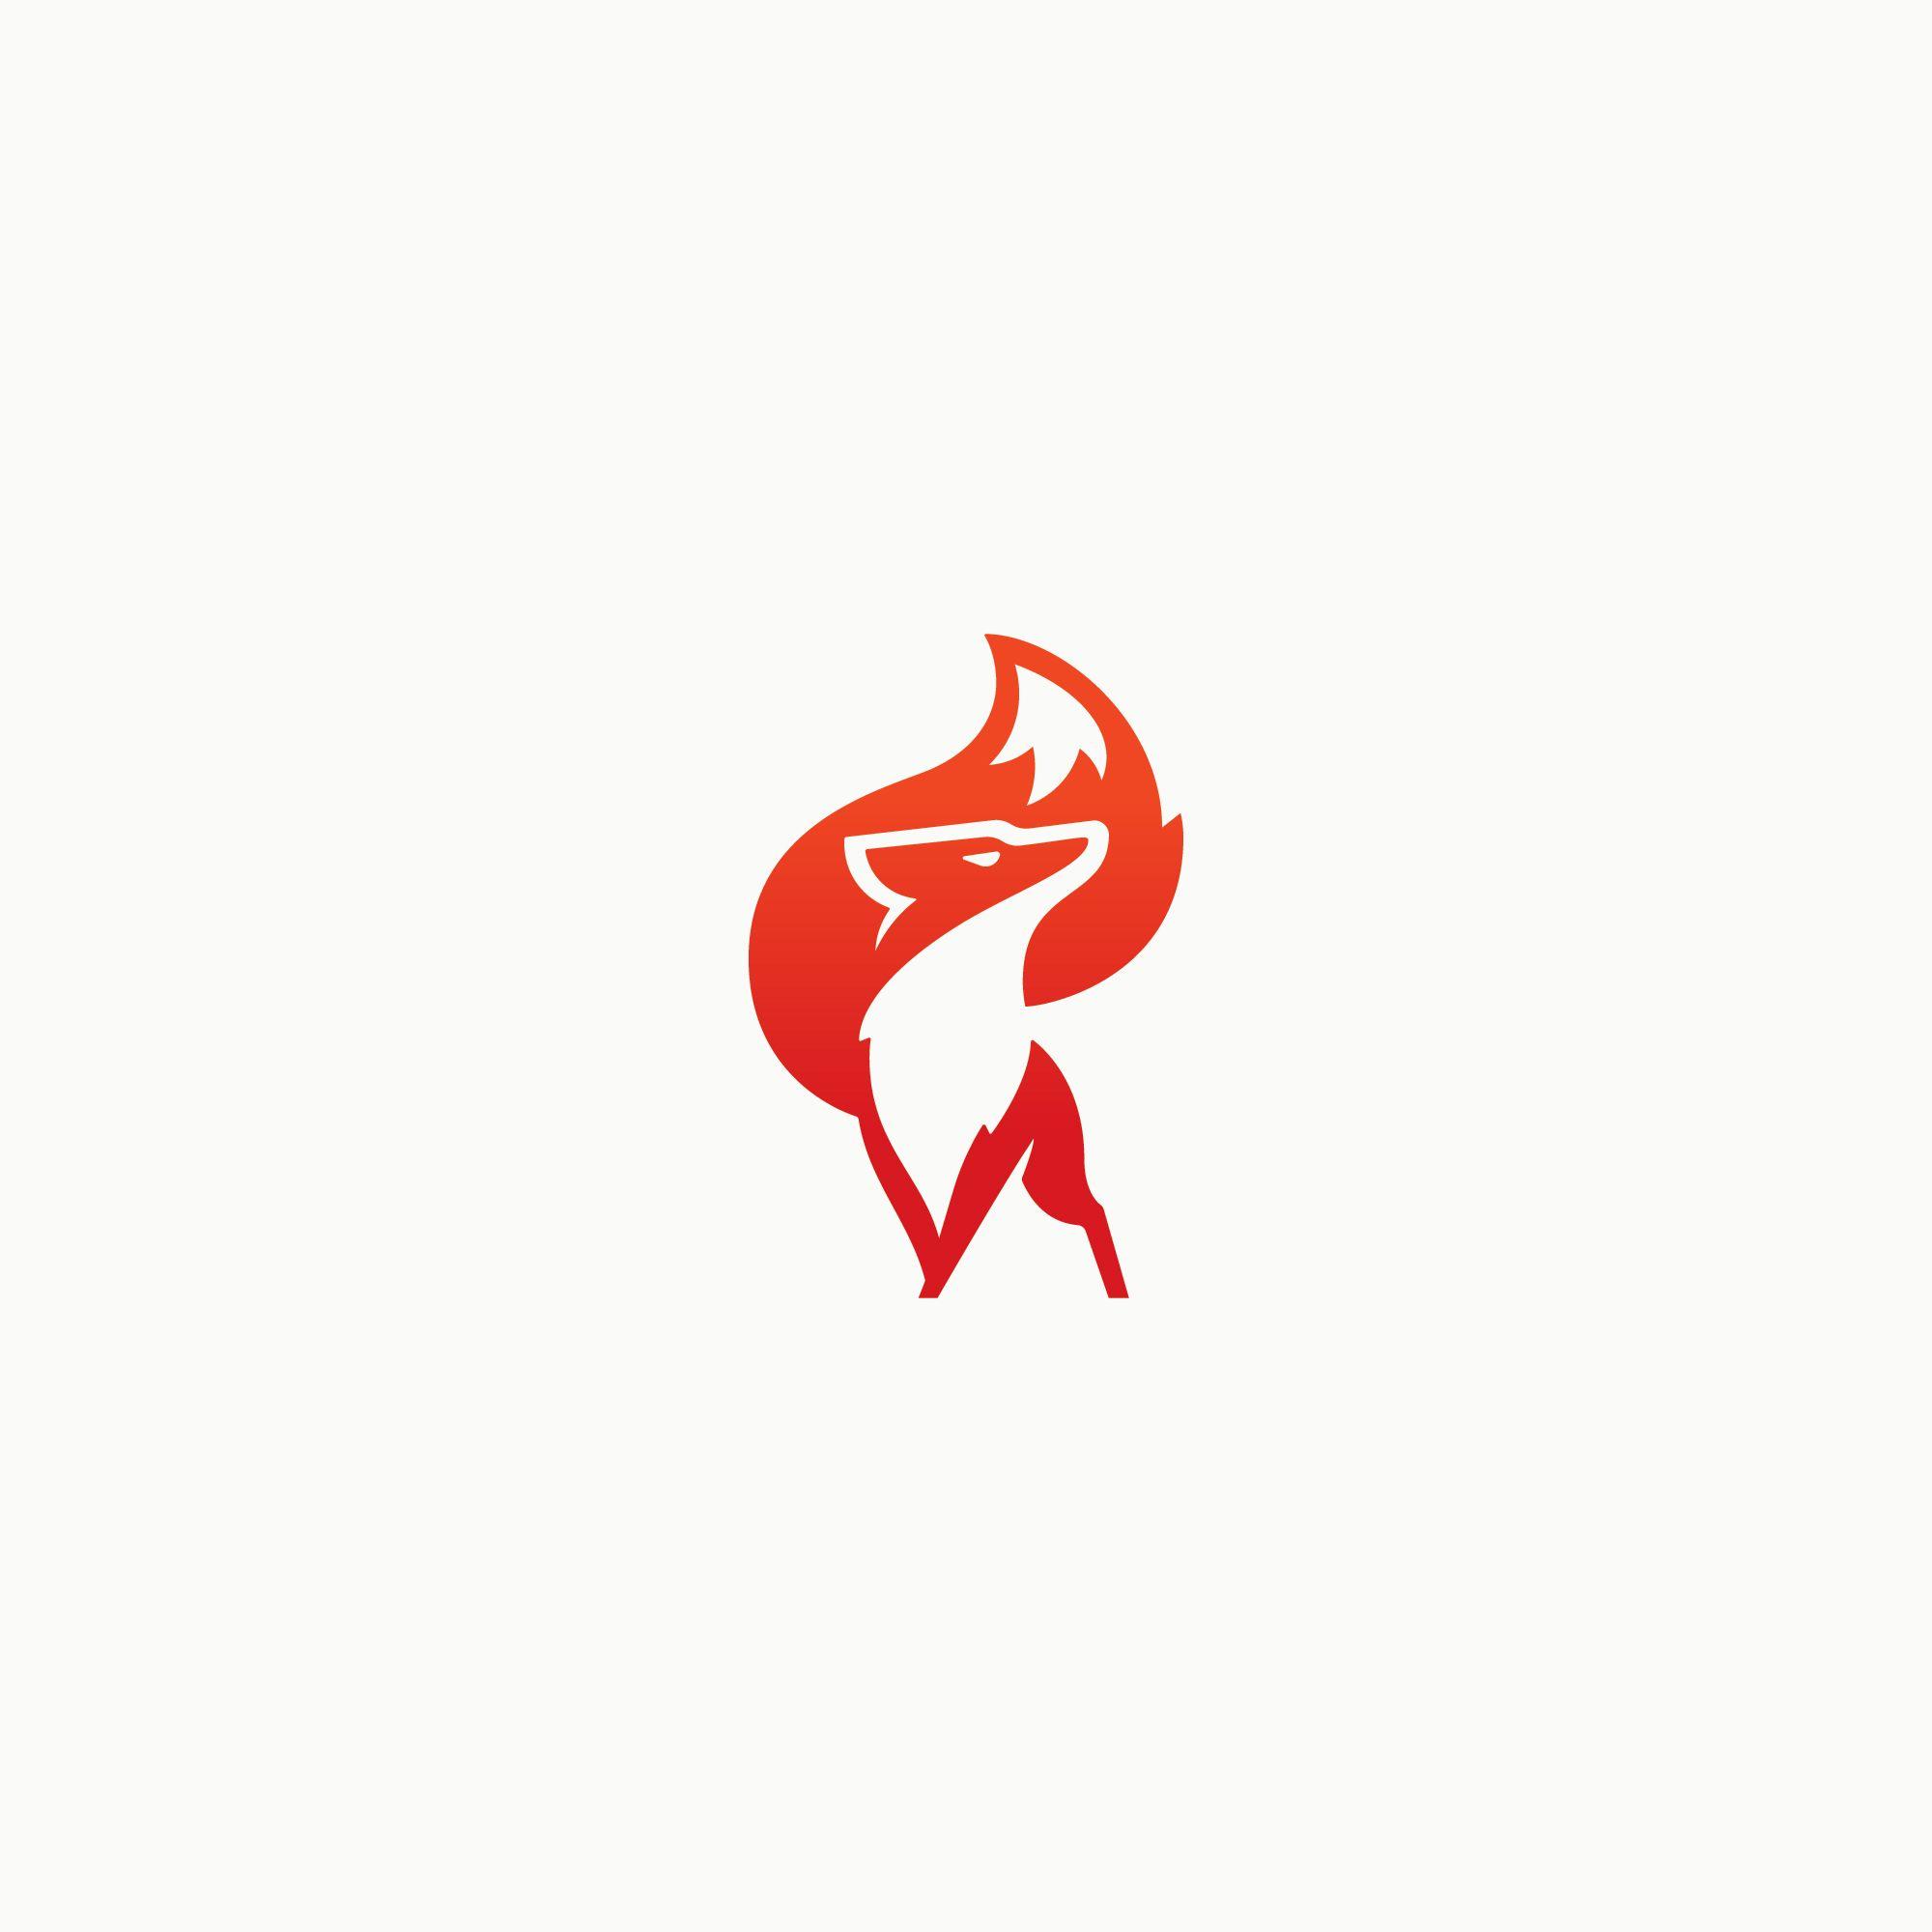 Fox Logo - Modern and elegant fox logo using negative space. Avaiable